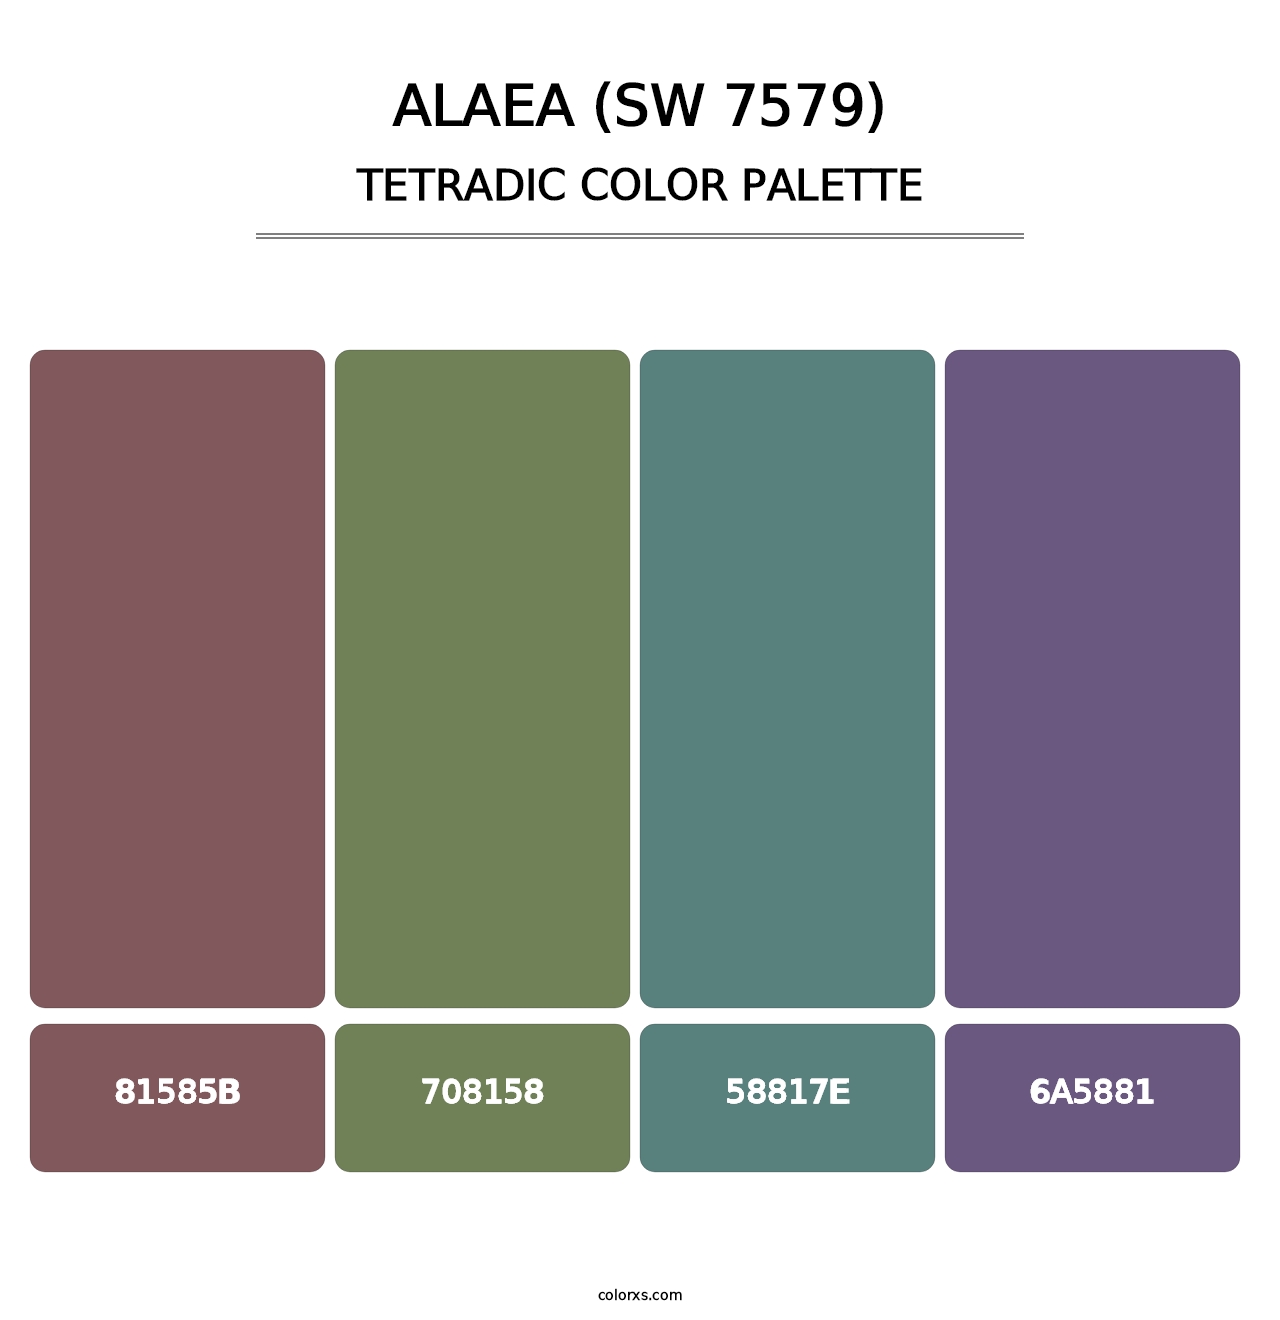 Alaea (SW 7579) - Tetradic Color Palette